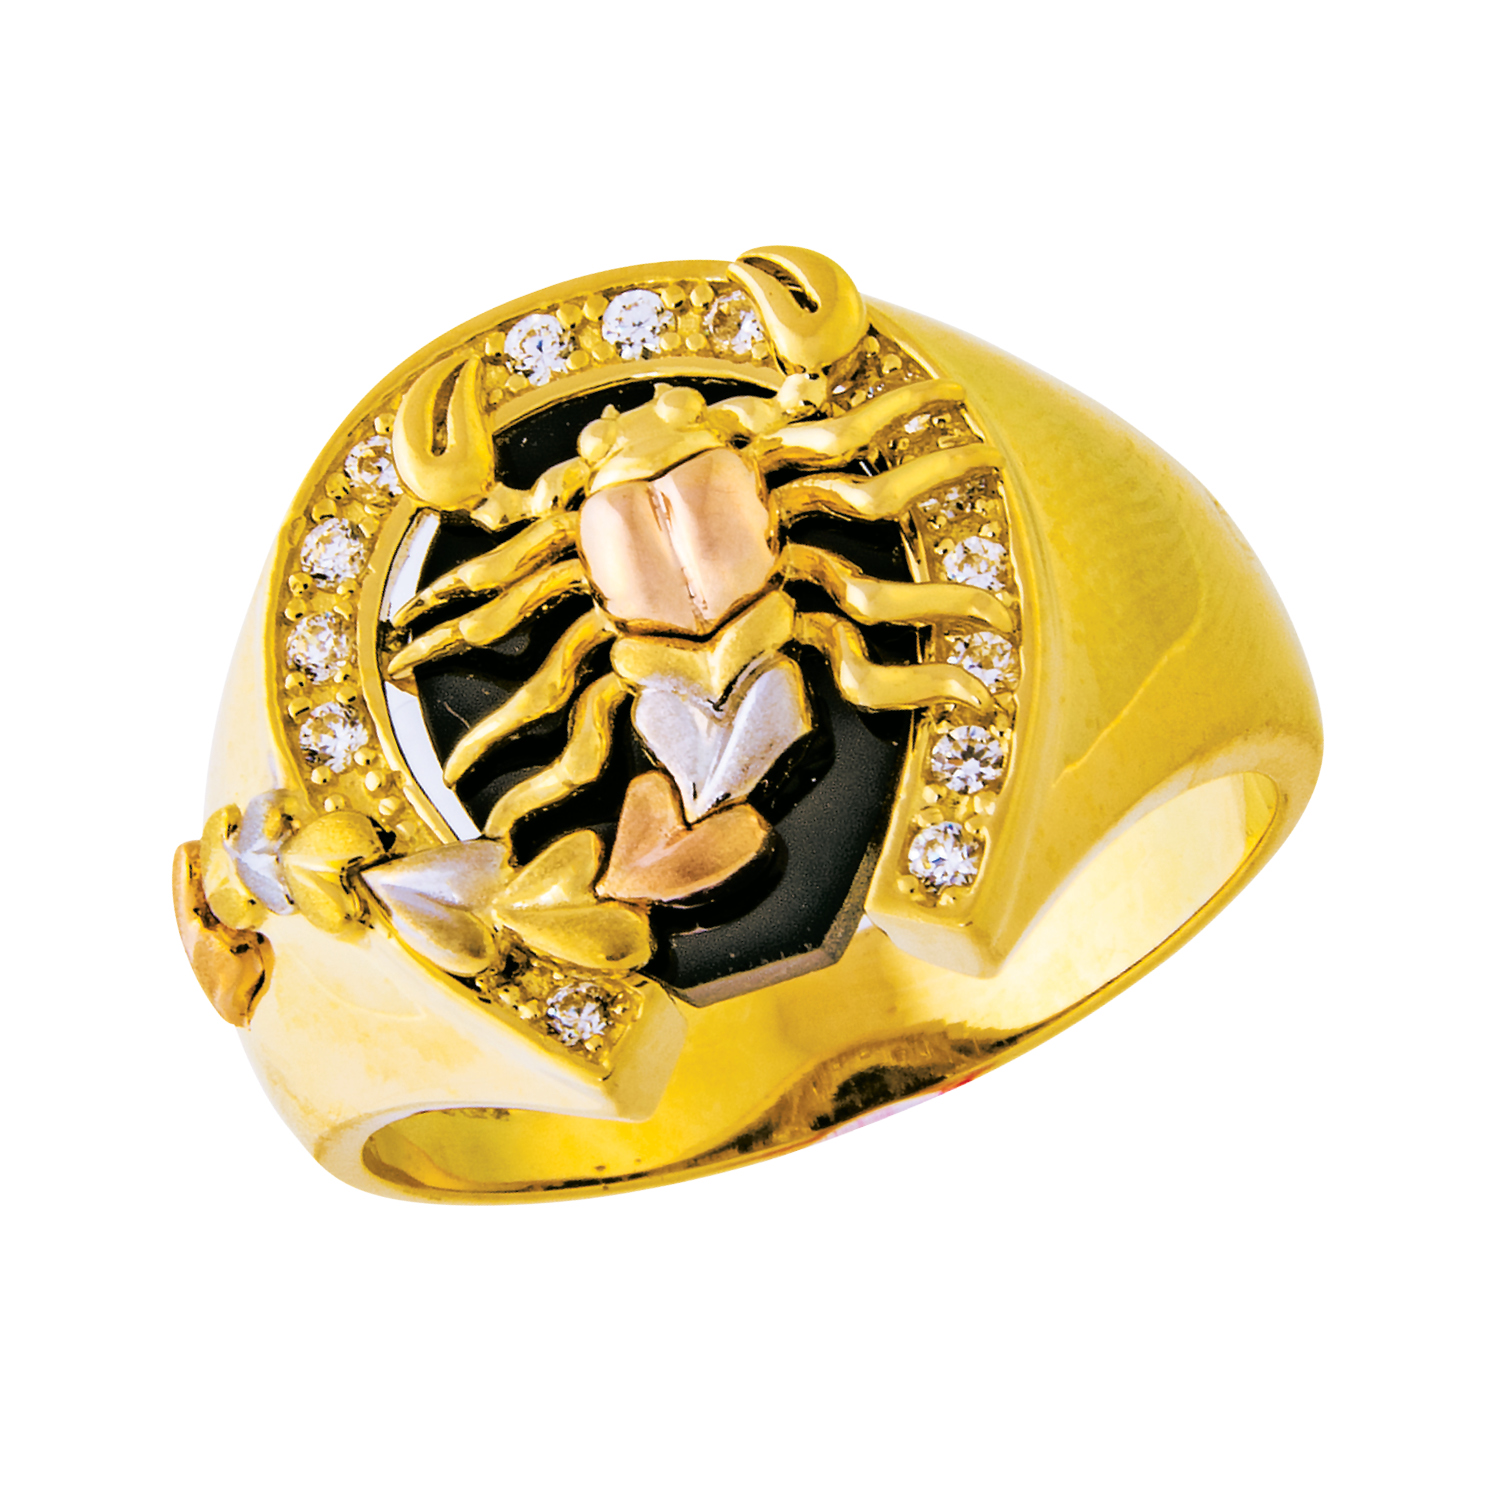 East West Half Bezel Diamond Men's Ring – With Clarity